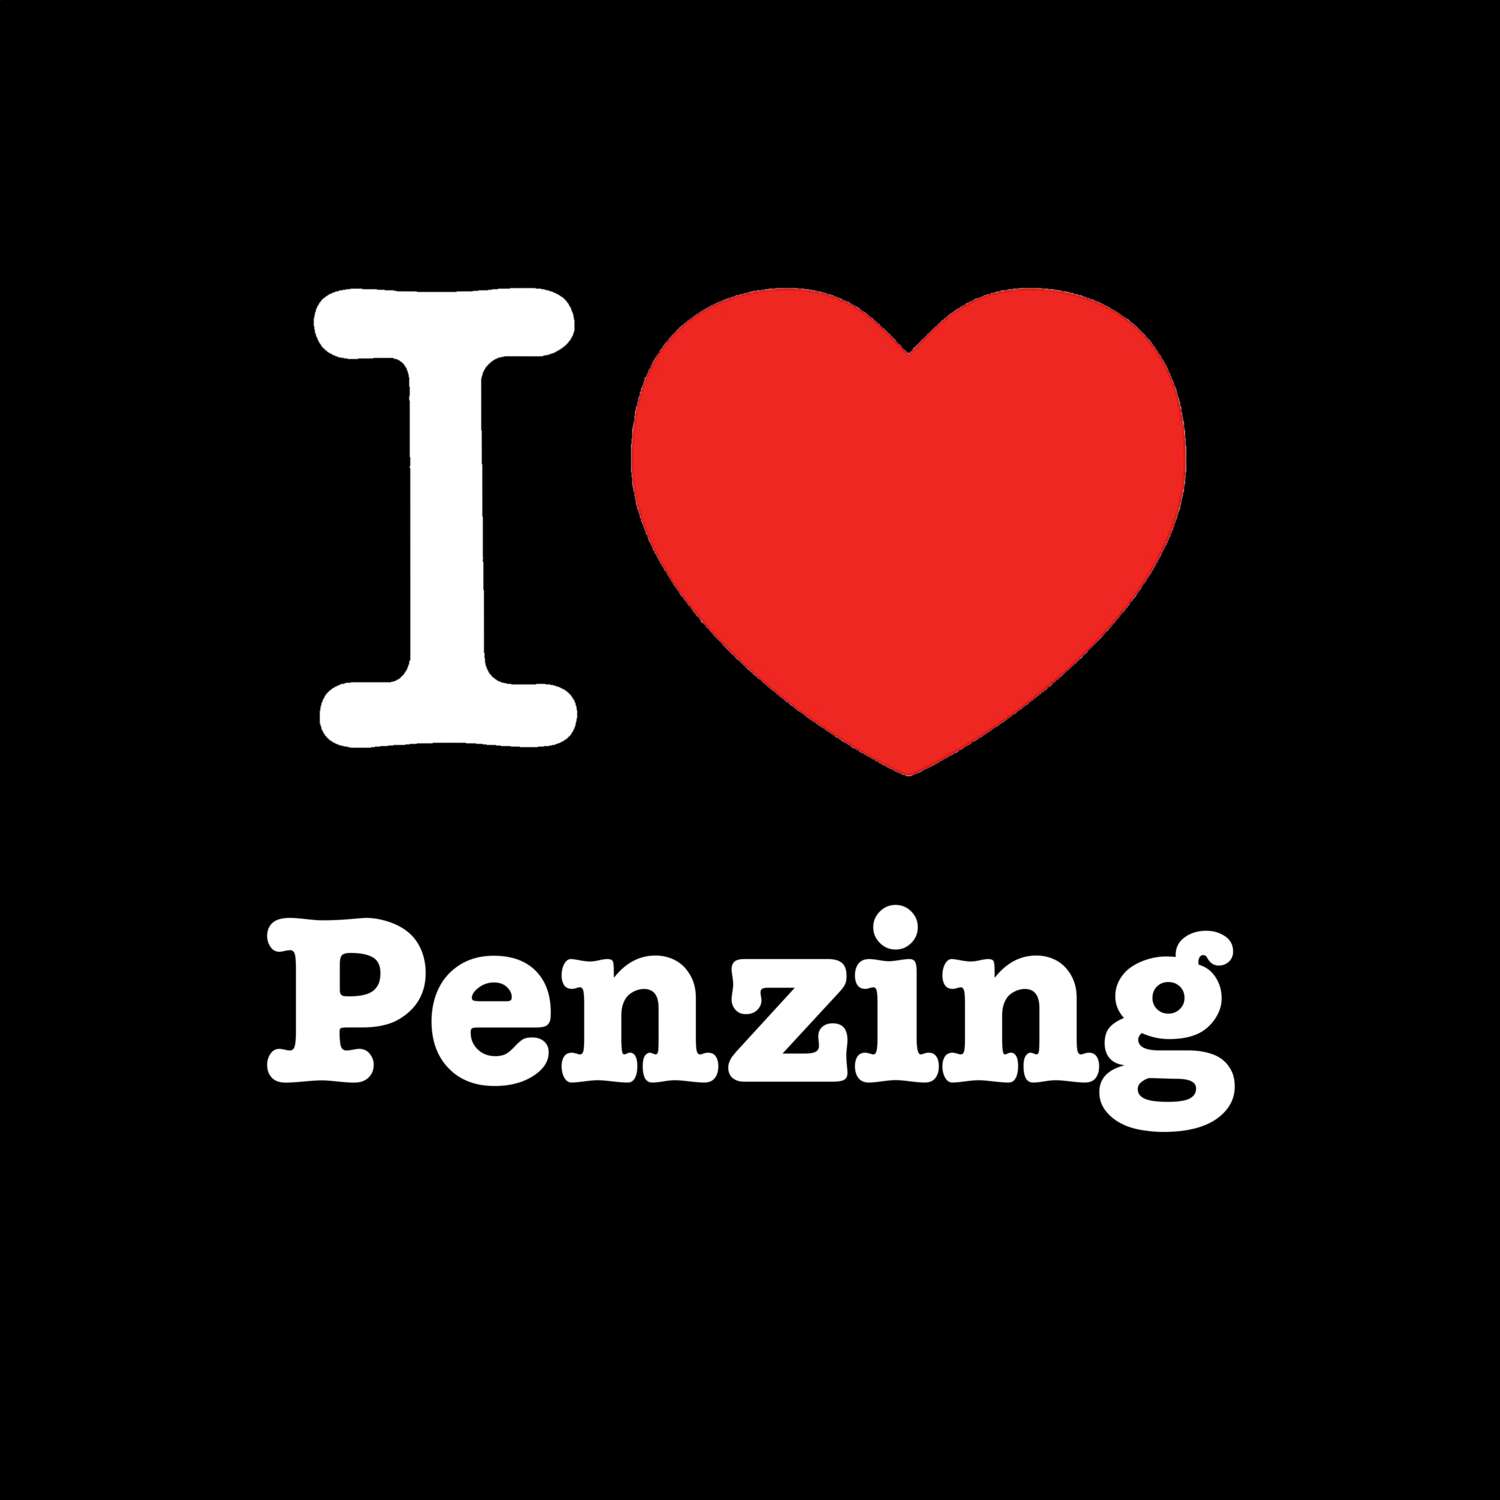 Penzing T-Shirt »I love«